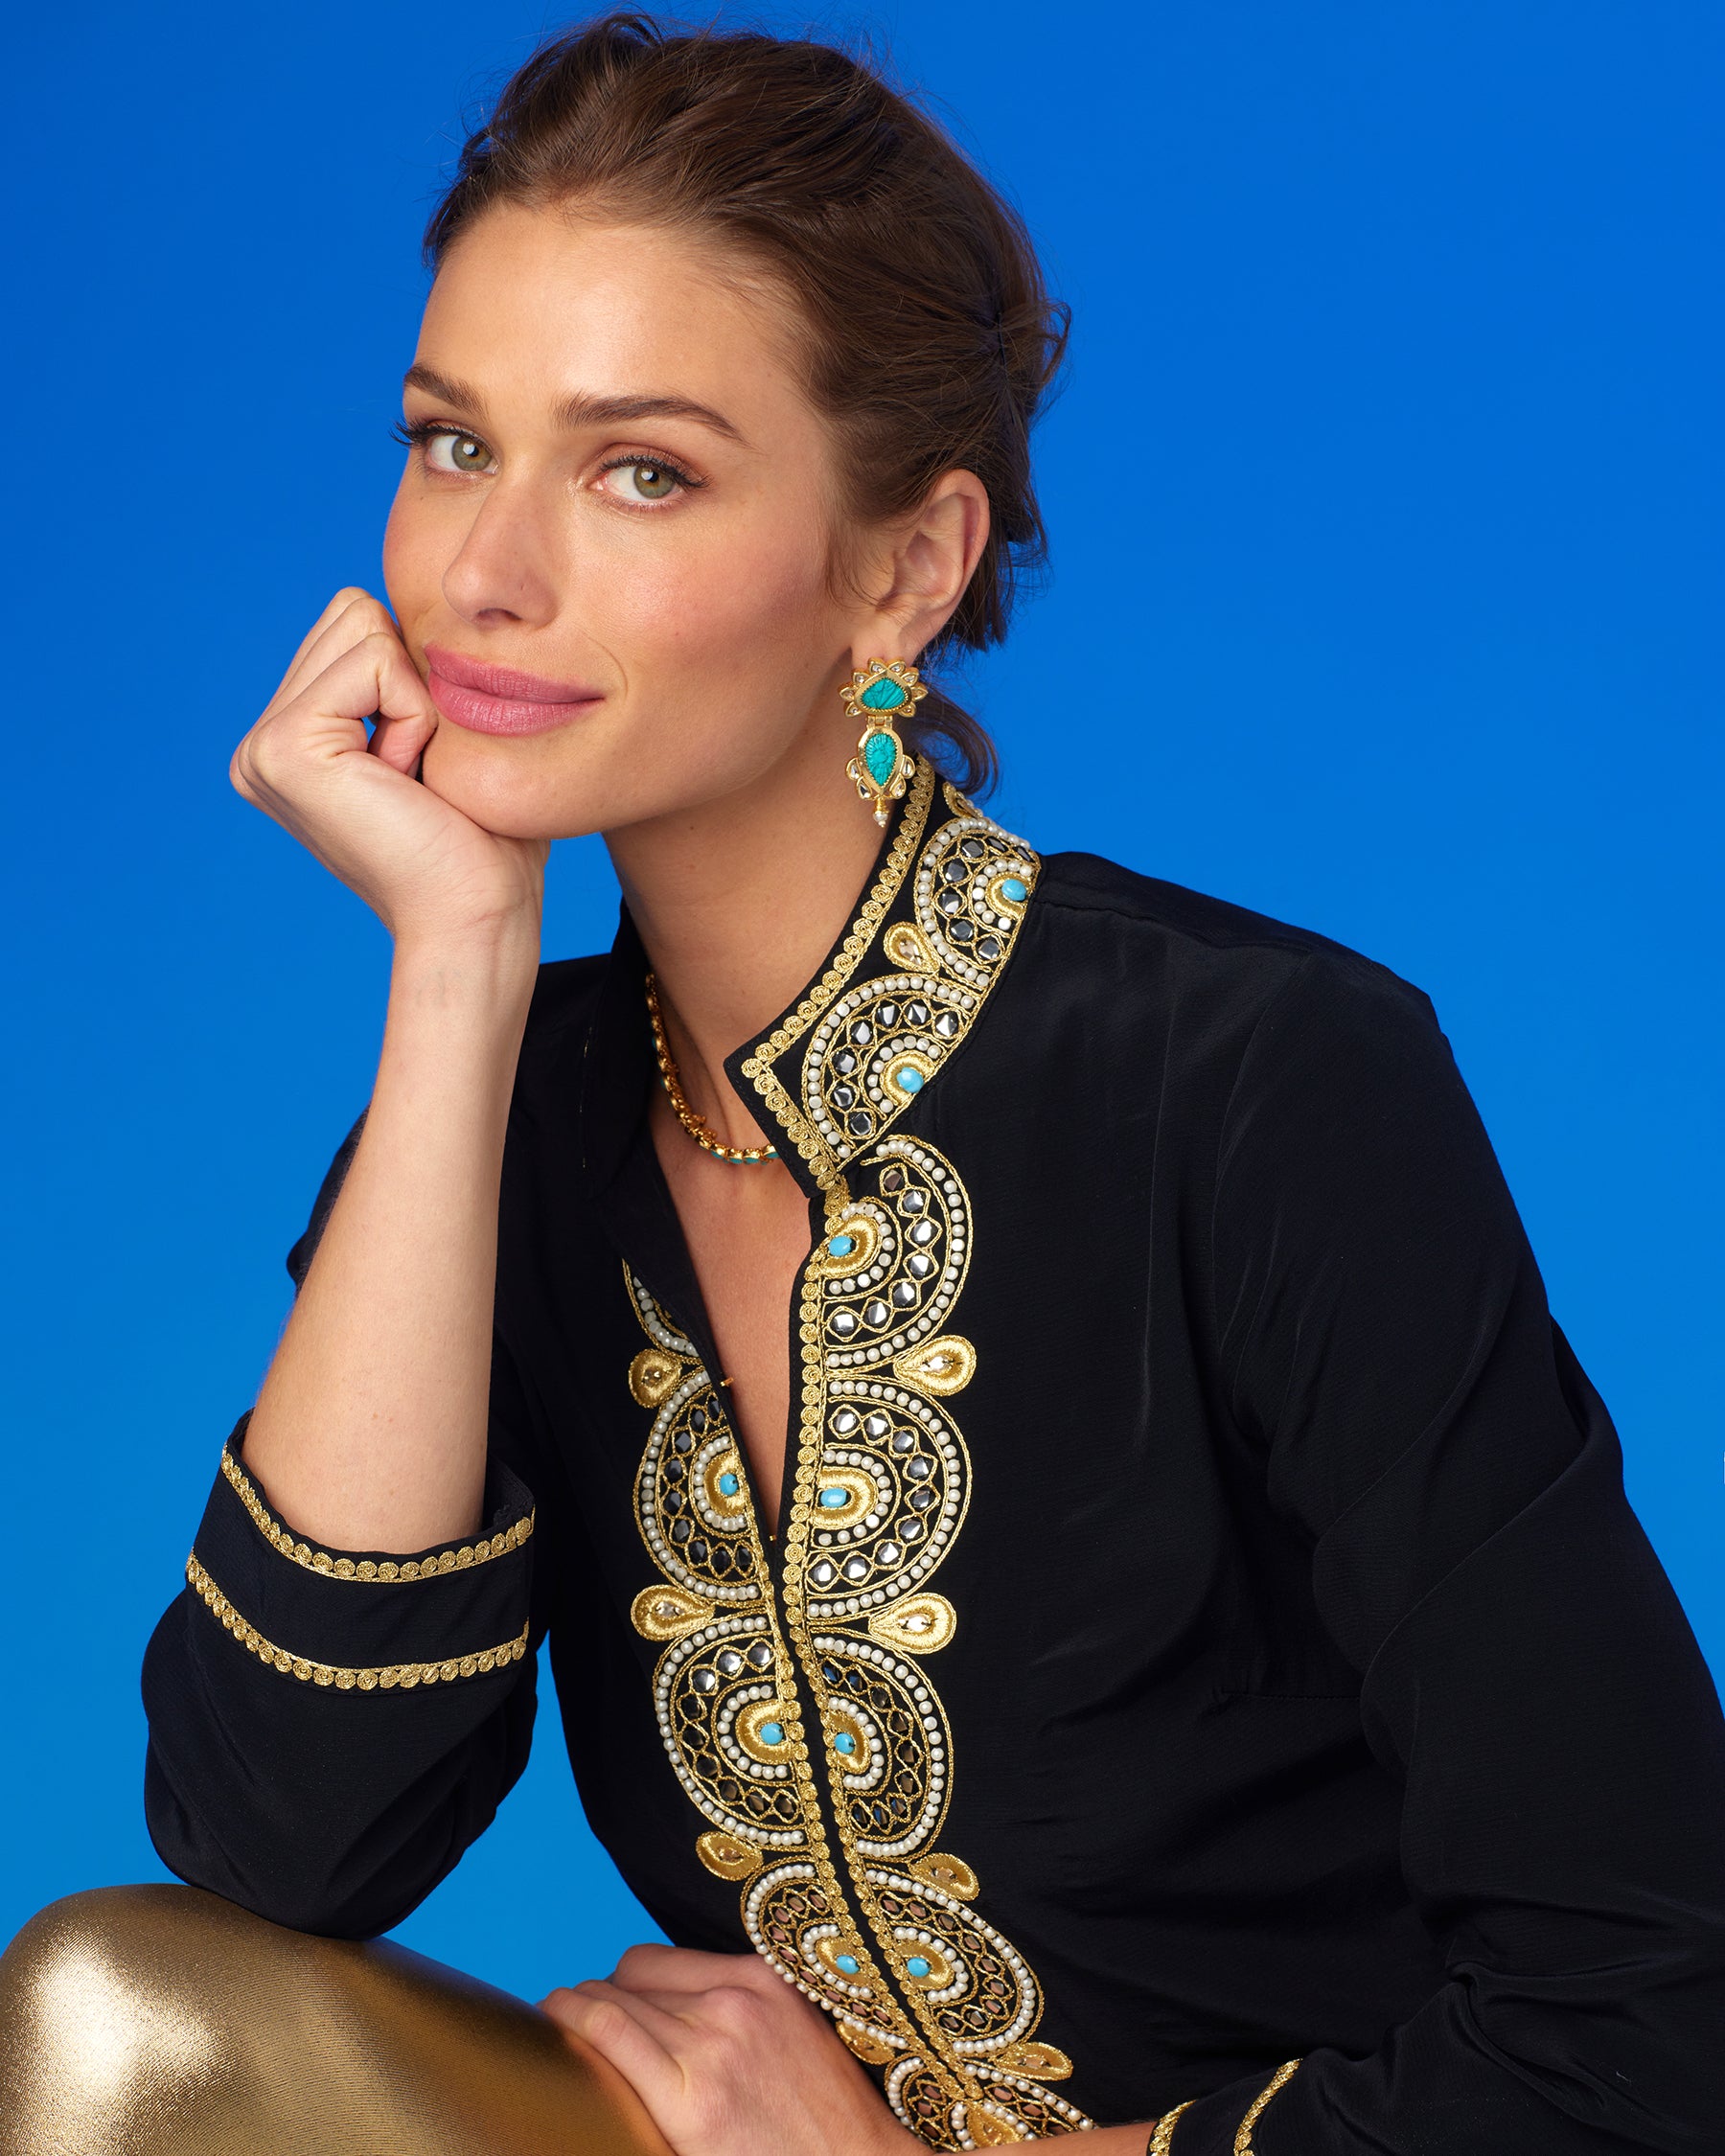 Noor Black Tunic with Gold Embellishment-Portrait